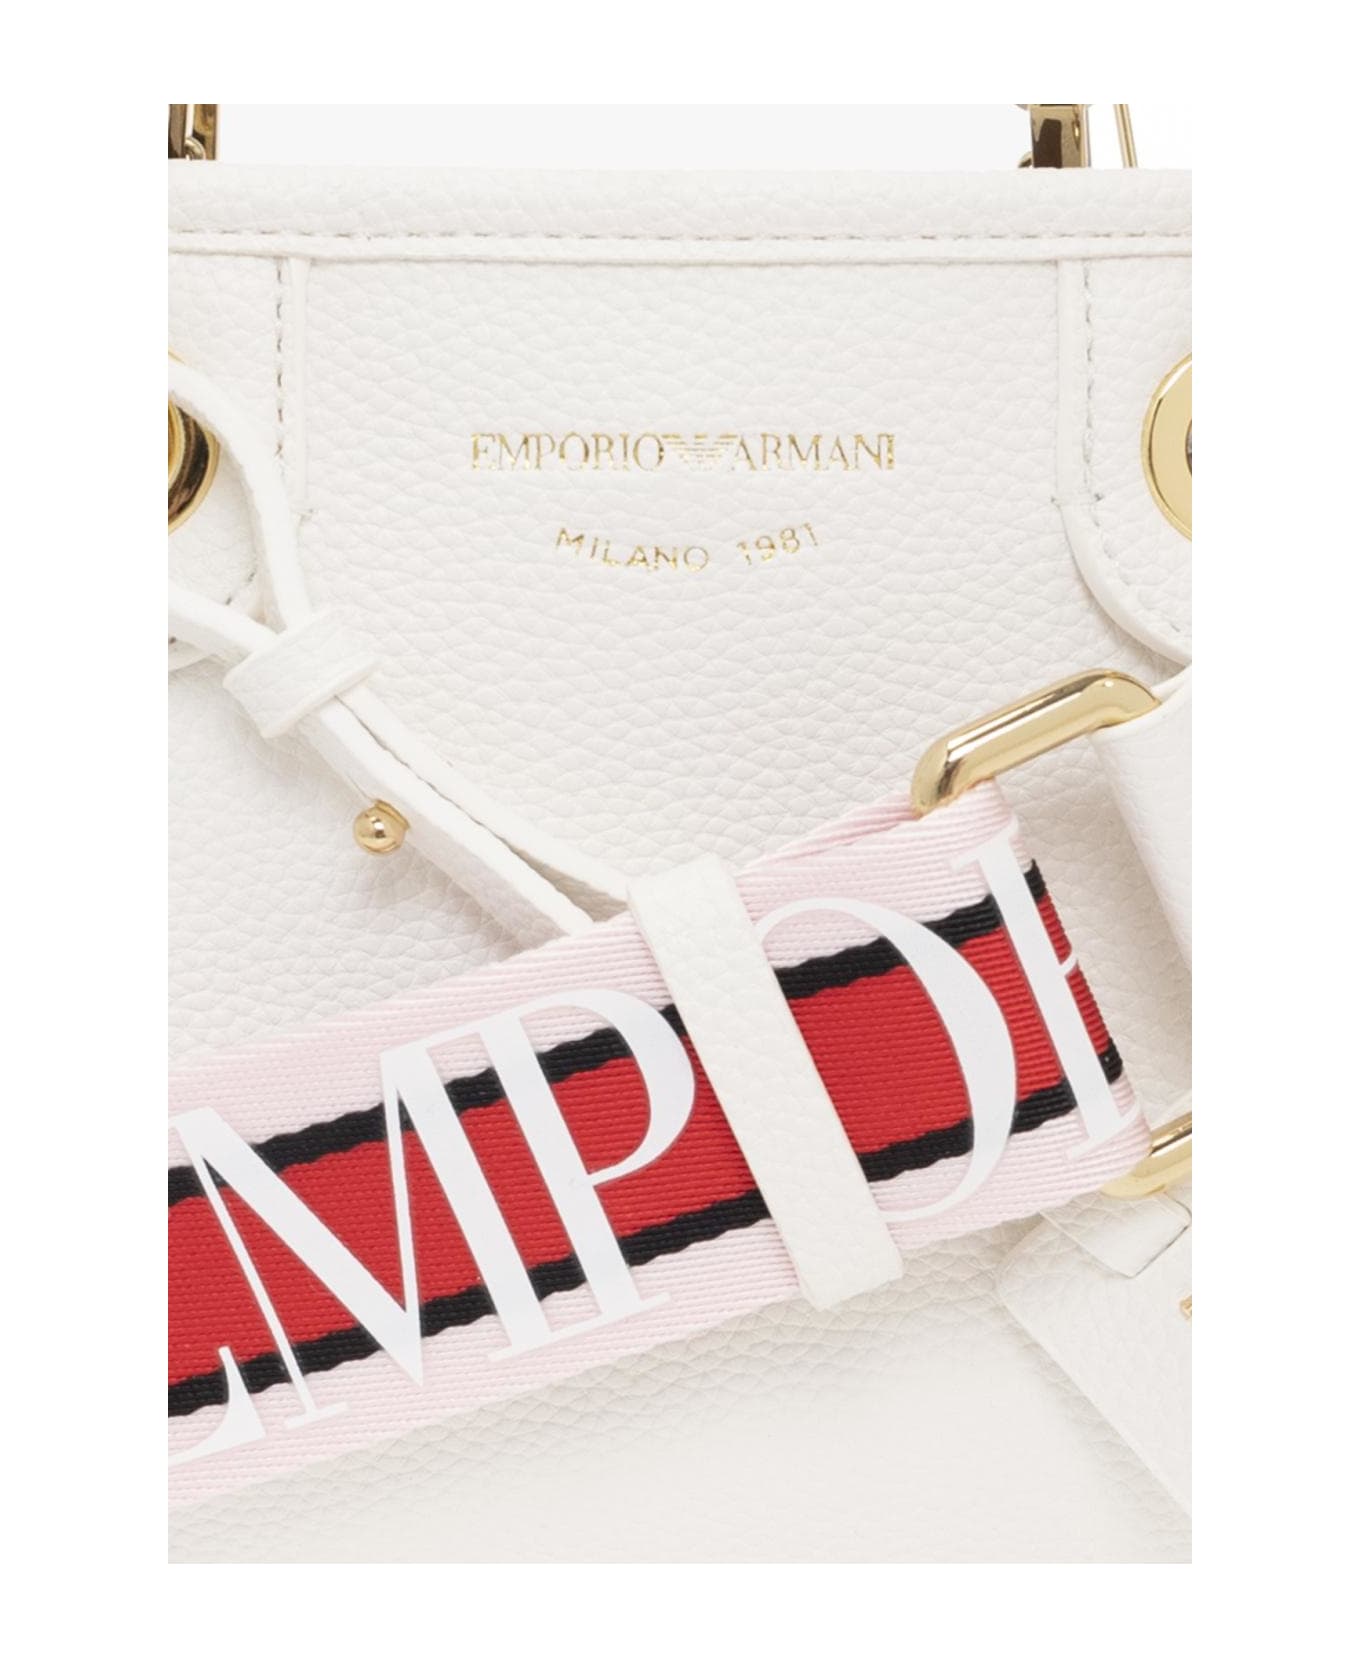 Emporio Armani 'myea Mini' Shoulder Bag - Bianco/cuoio ショルダーバッグ